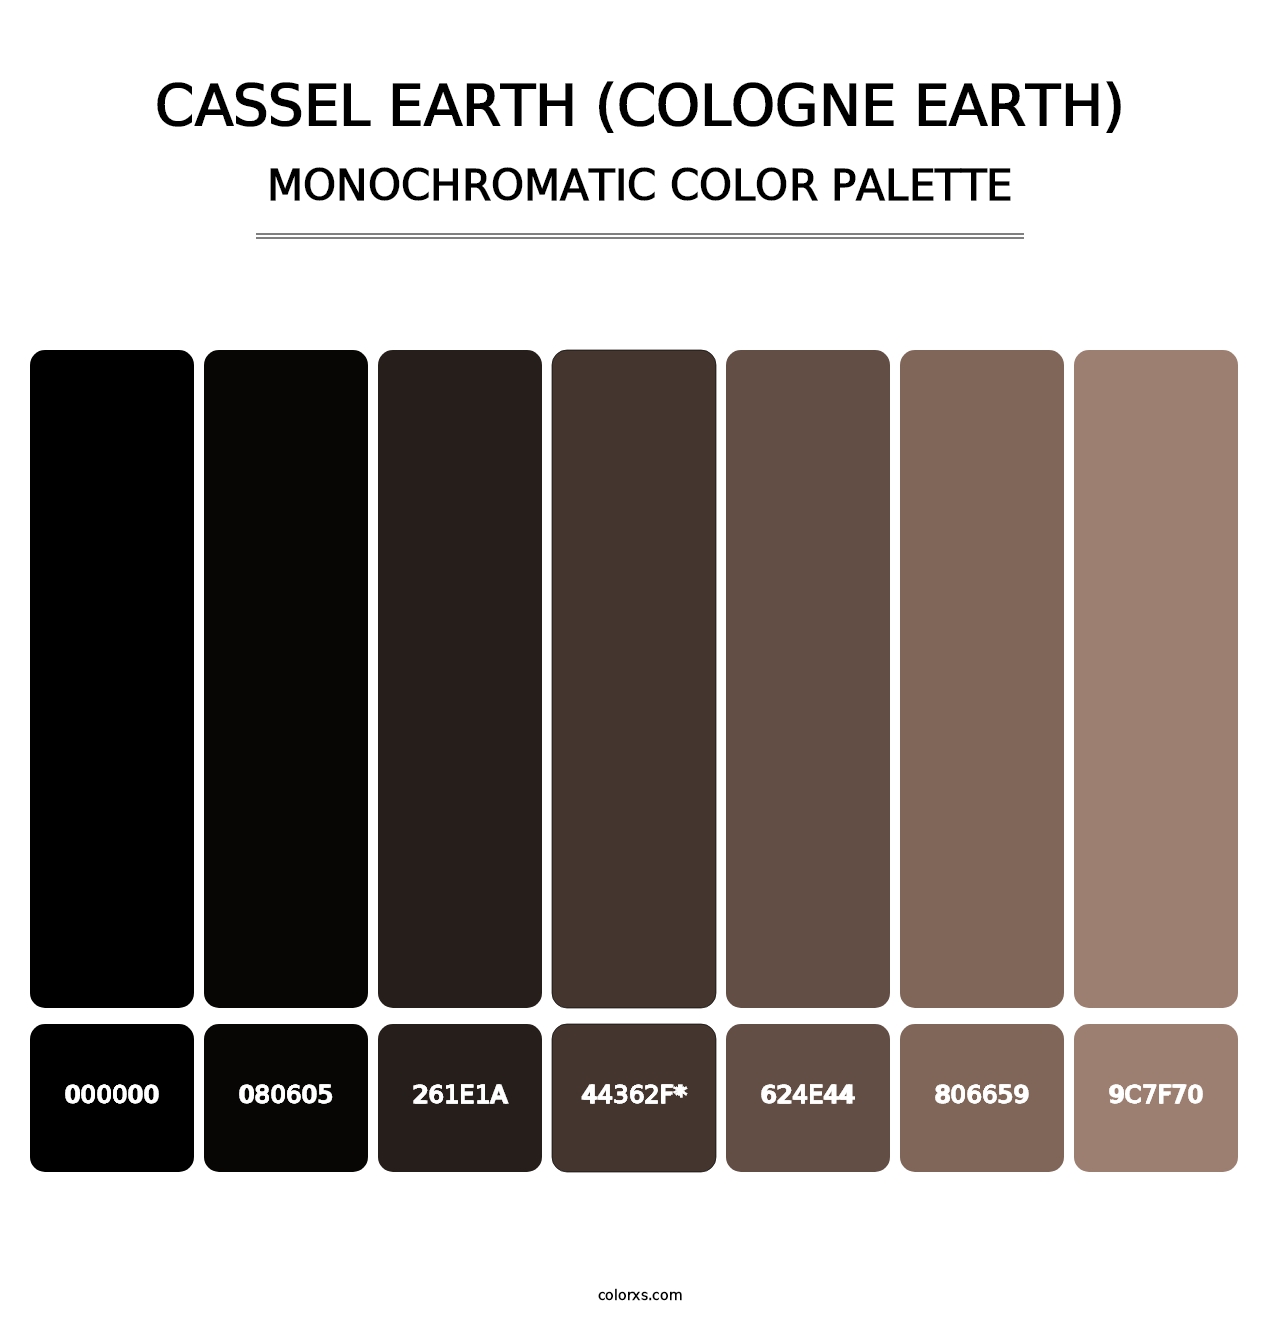 Cassel Earth (Cologne Earth) - Monochromatic Color Palette